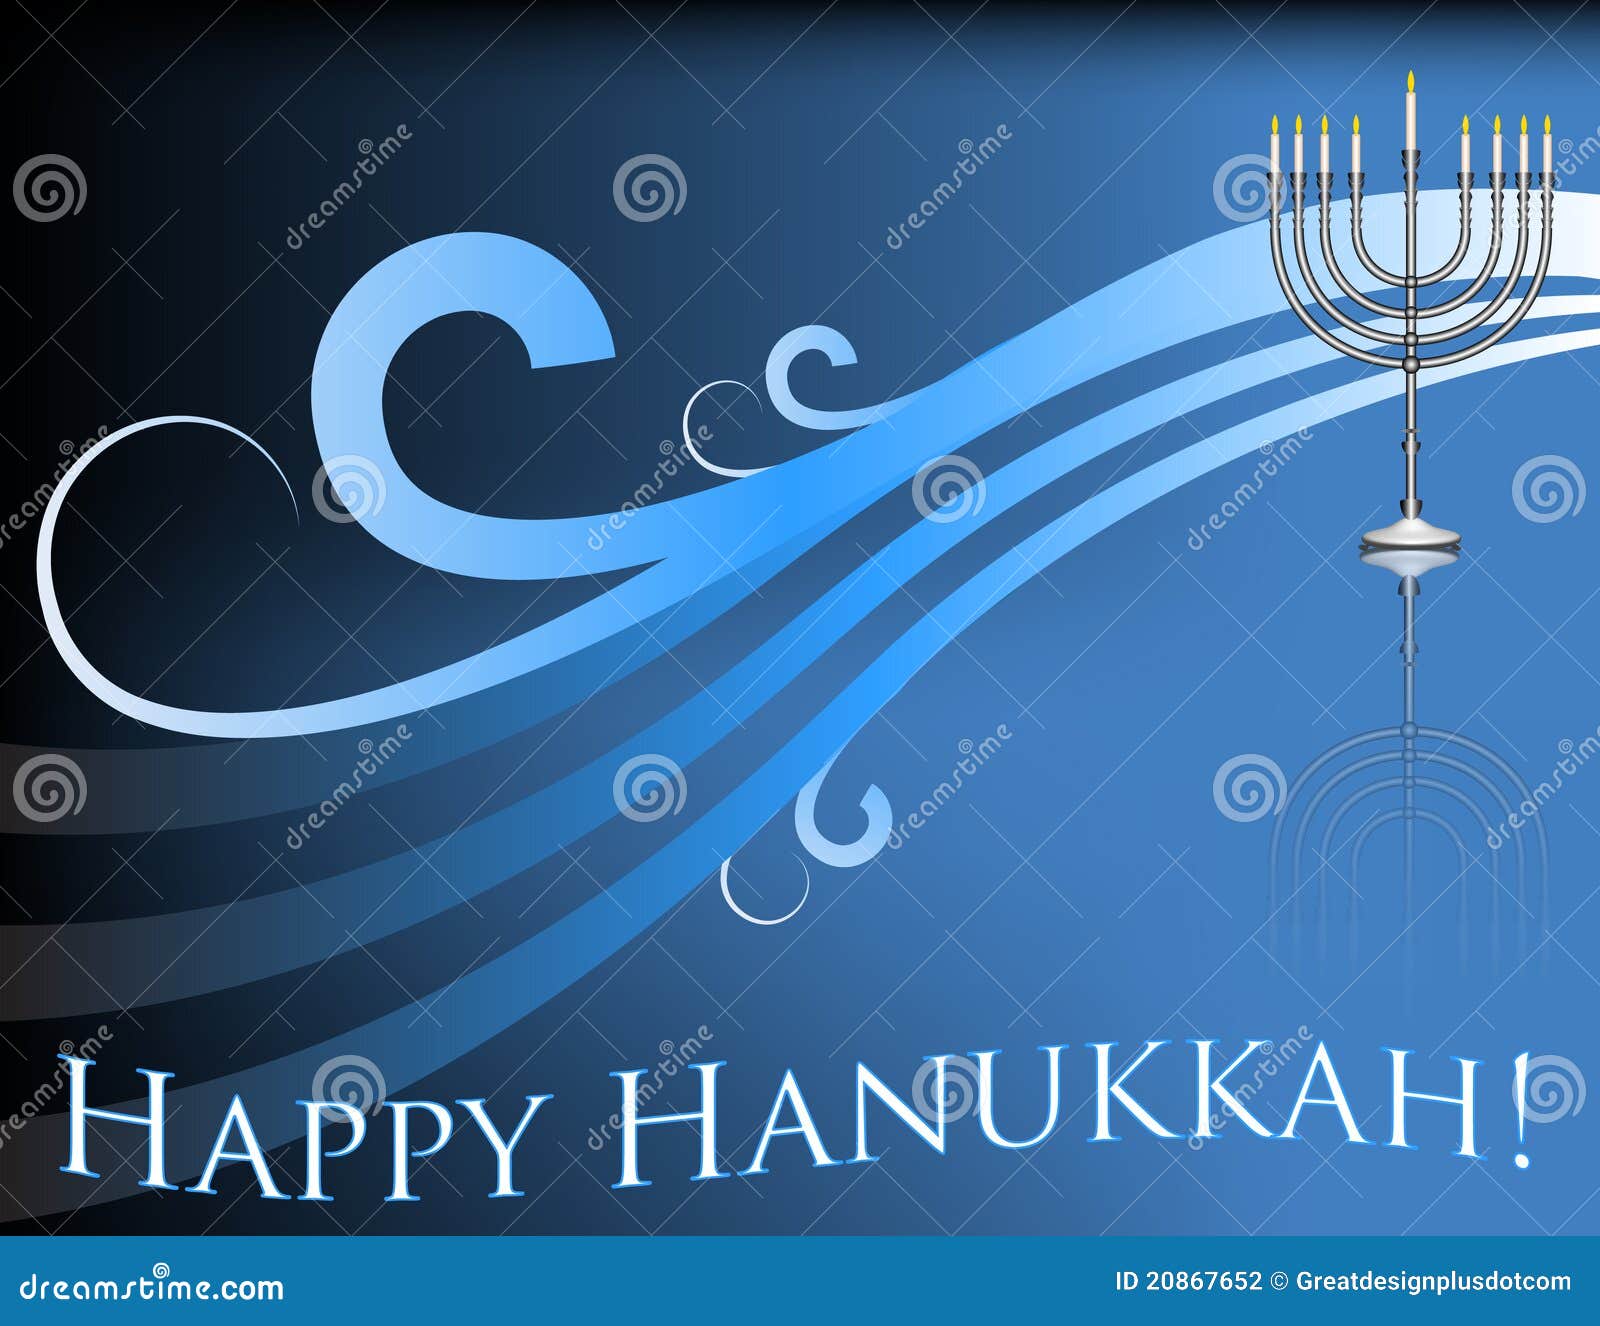 clip art happy hanukkah - photo #46